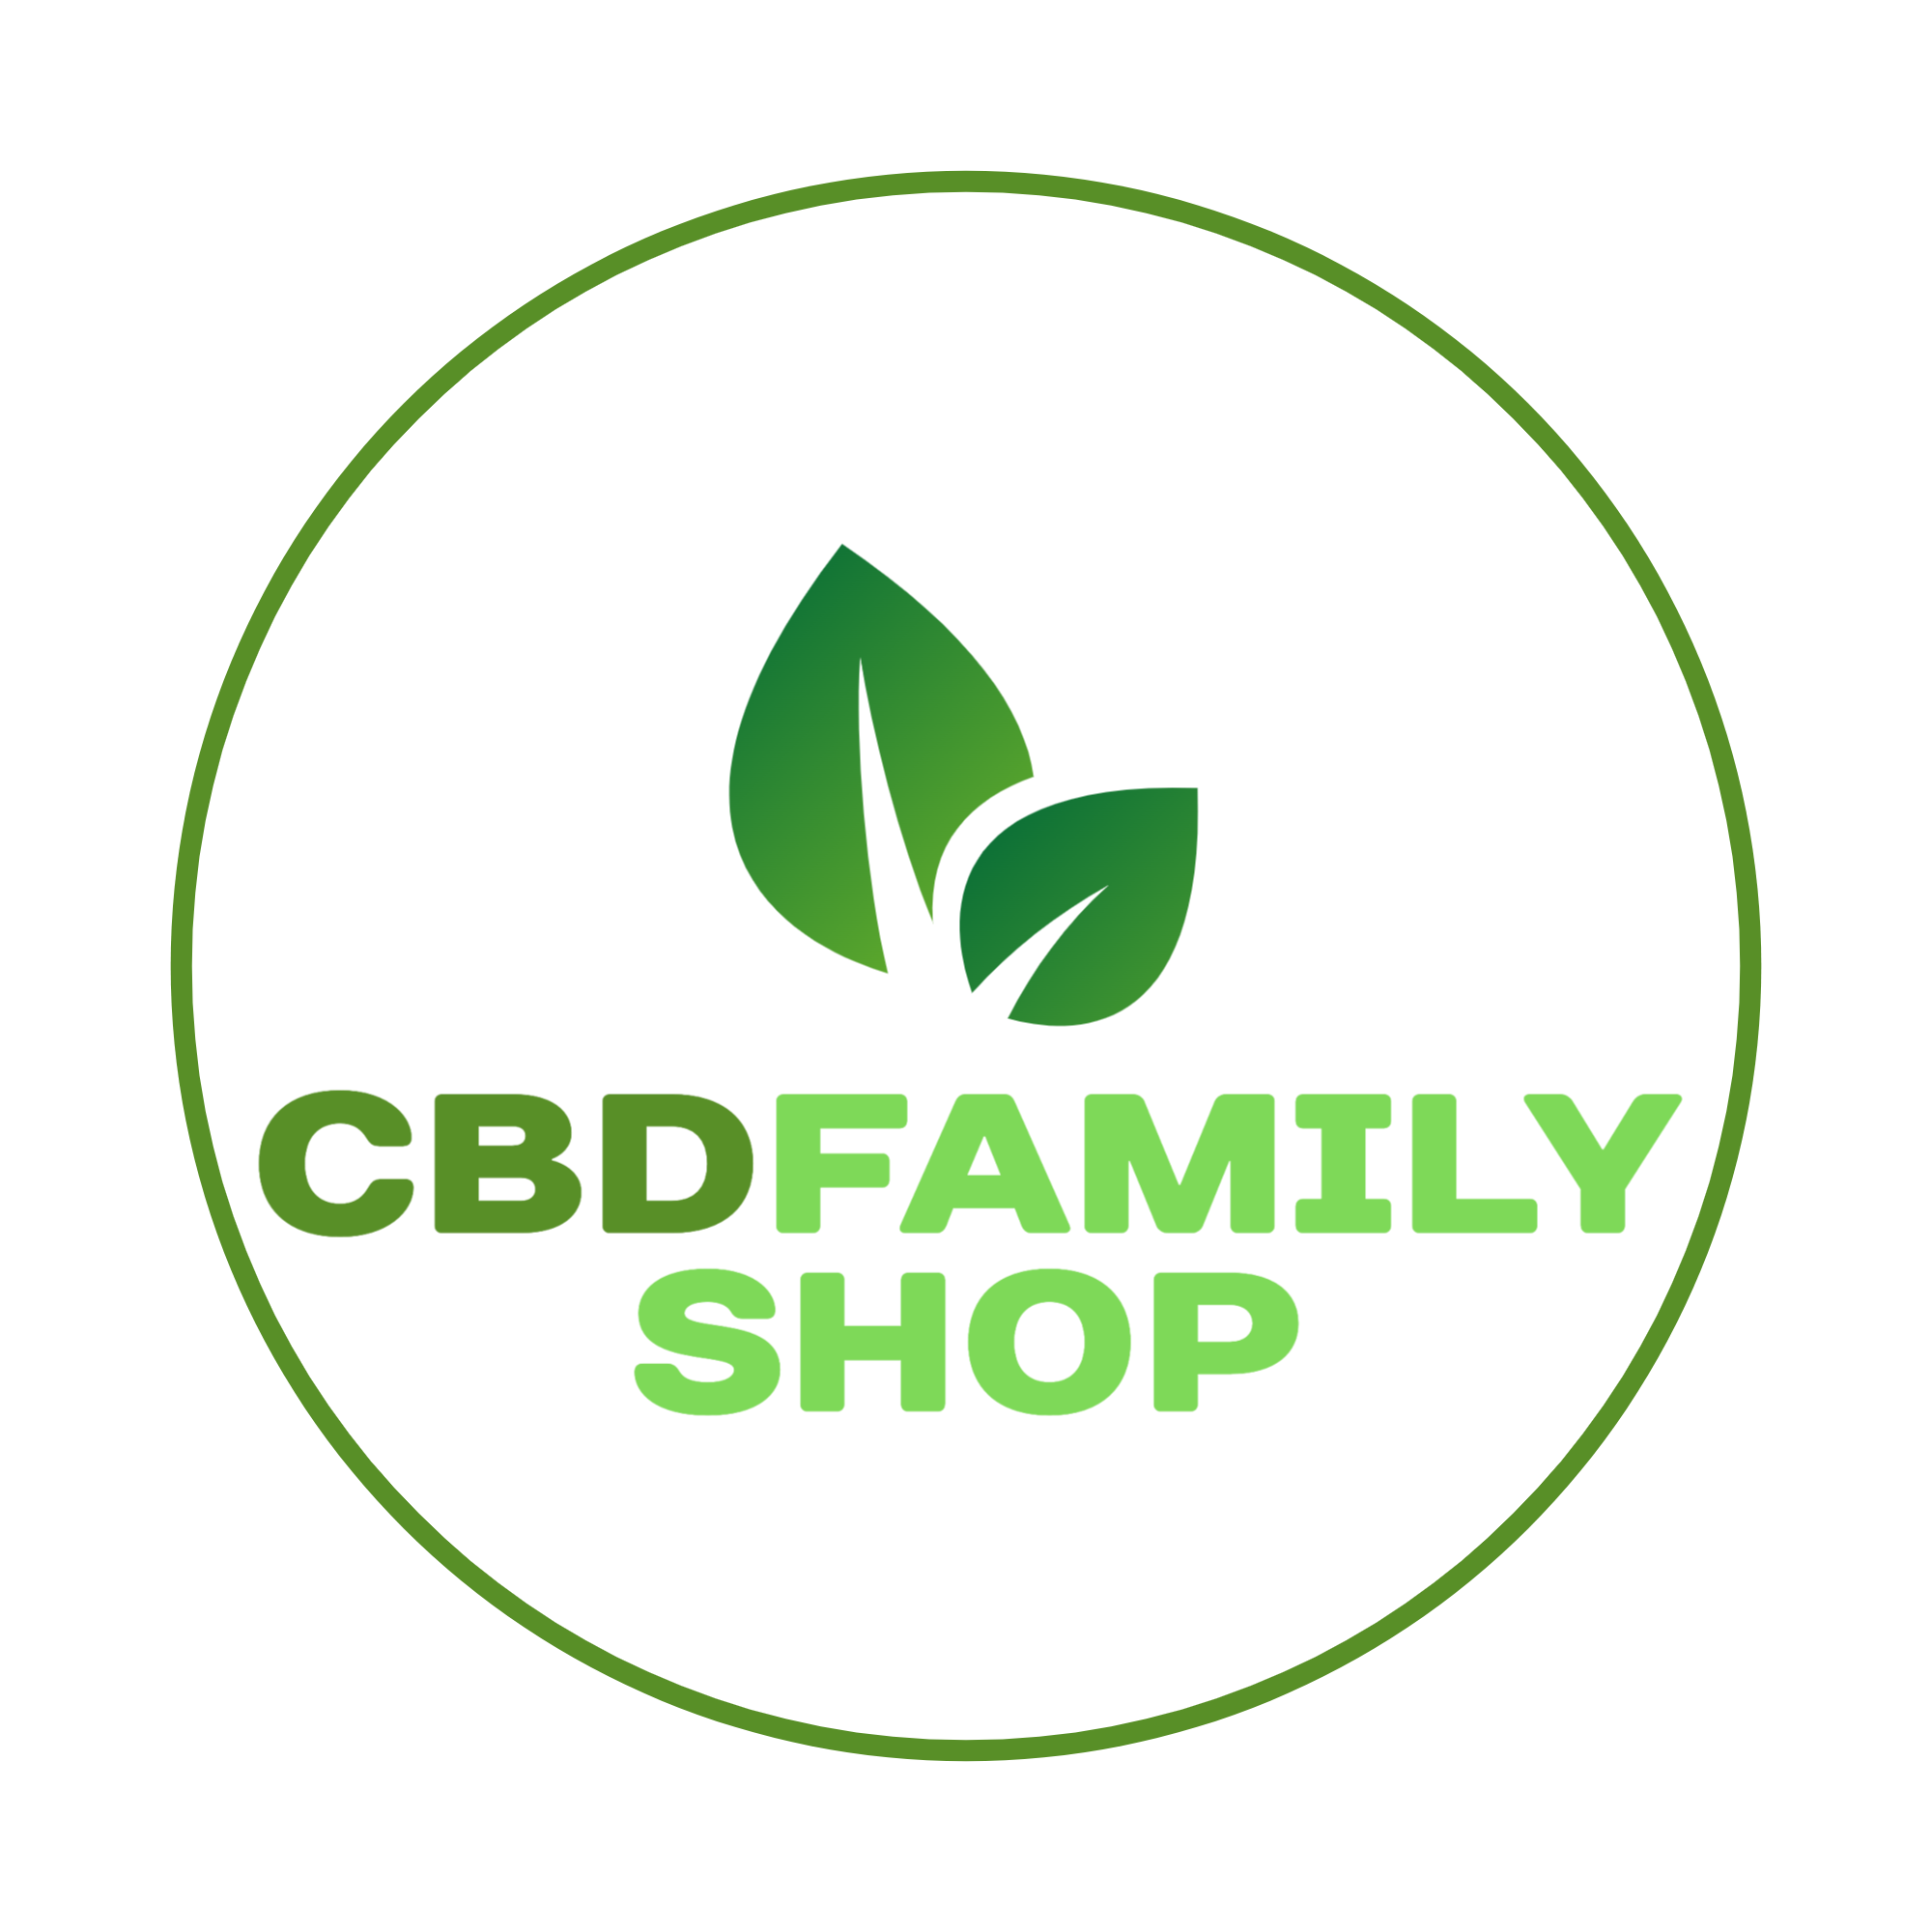 CBD family shop